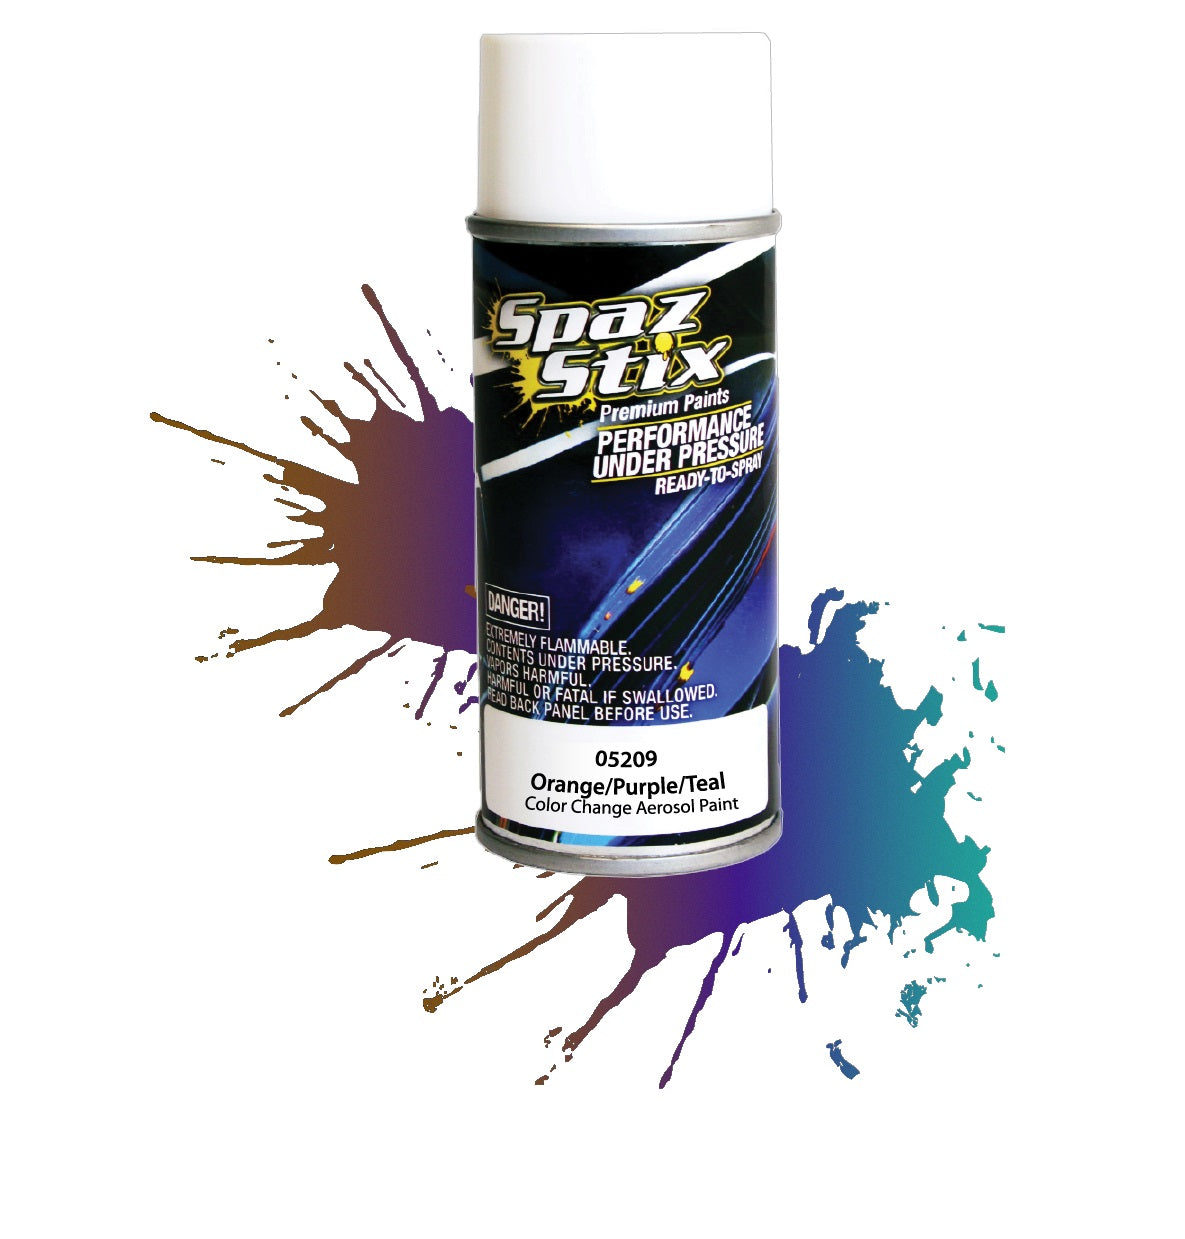 Spaz Stix Multi-Color Change Spray Paint (Orange/Purple/Teal) (3.5oz)